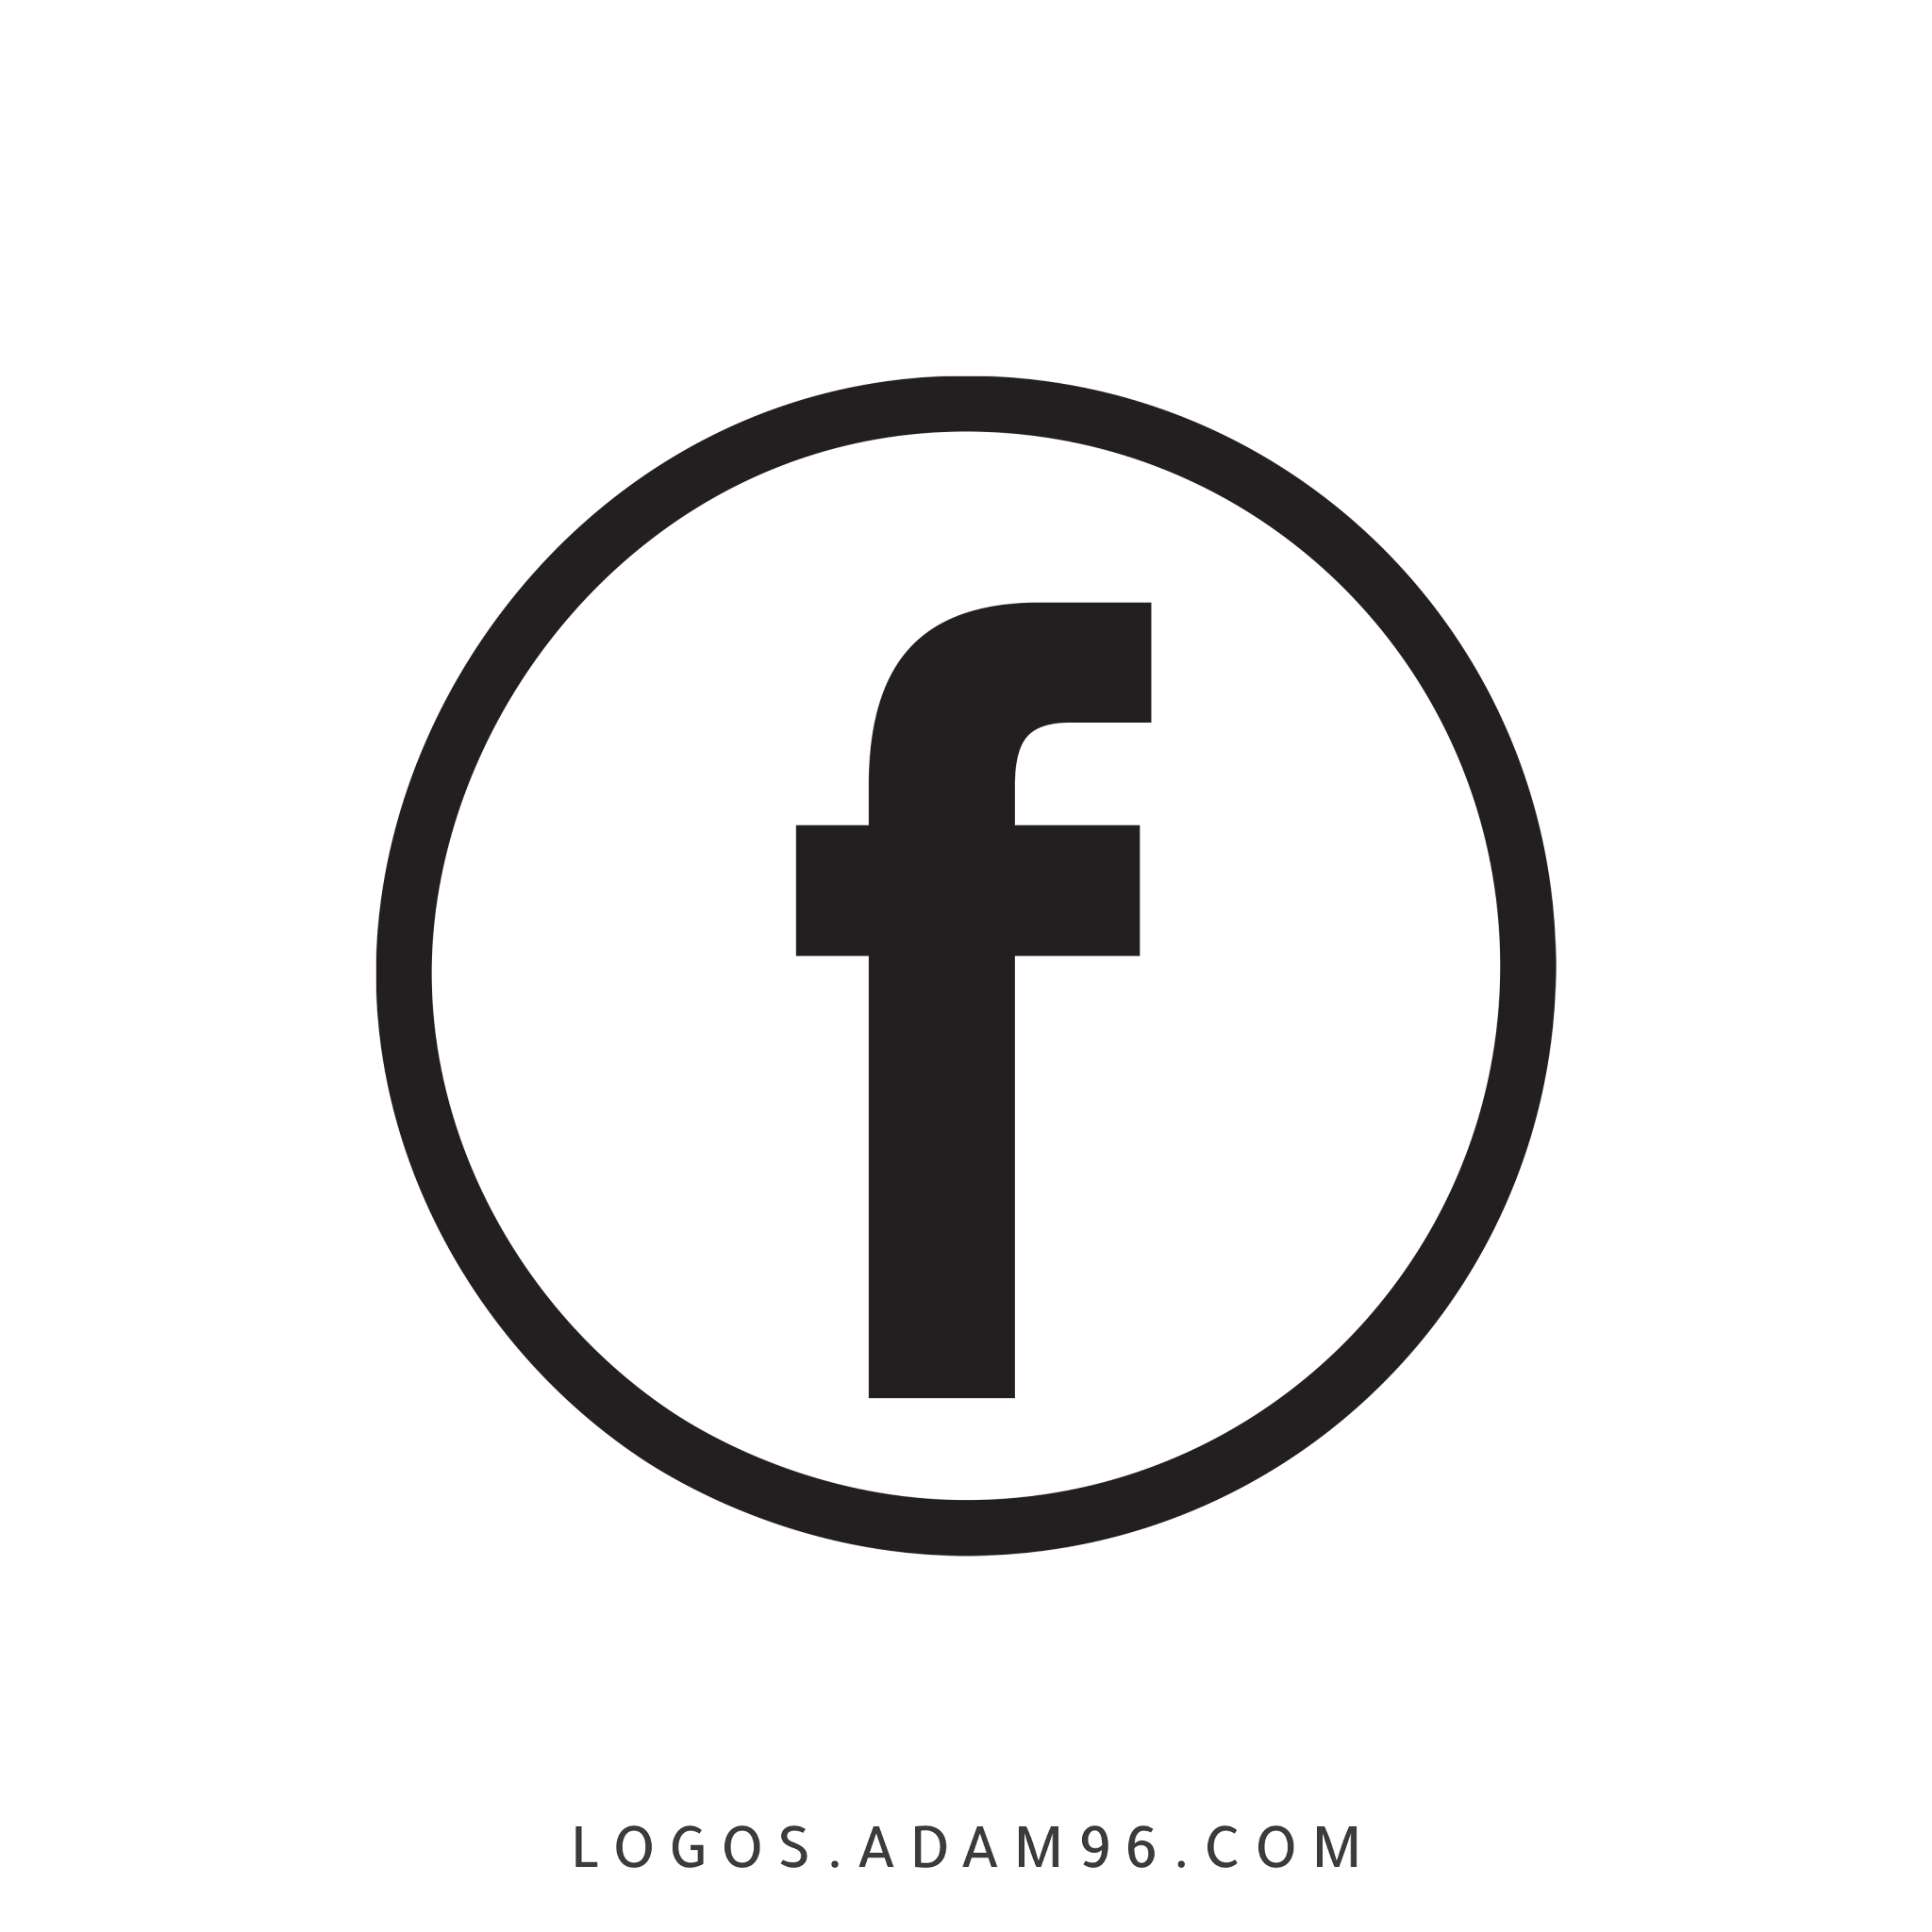 Facebook Logo Black and White Transparent PNG - PDF